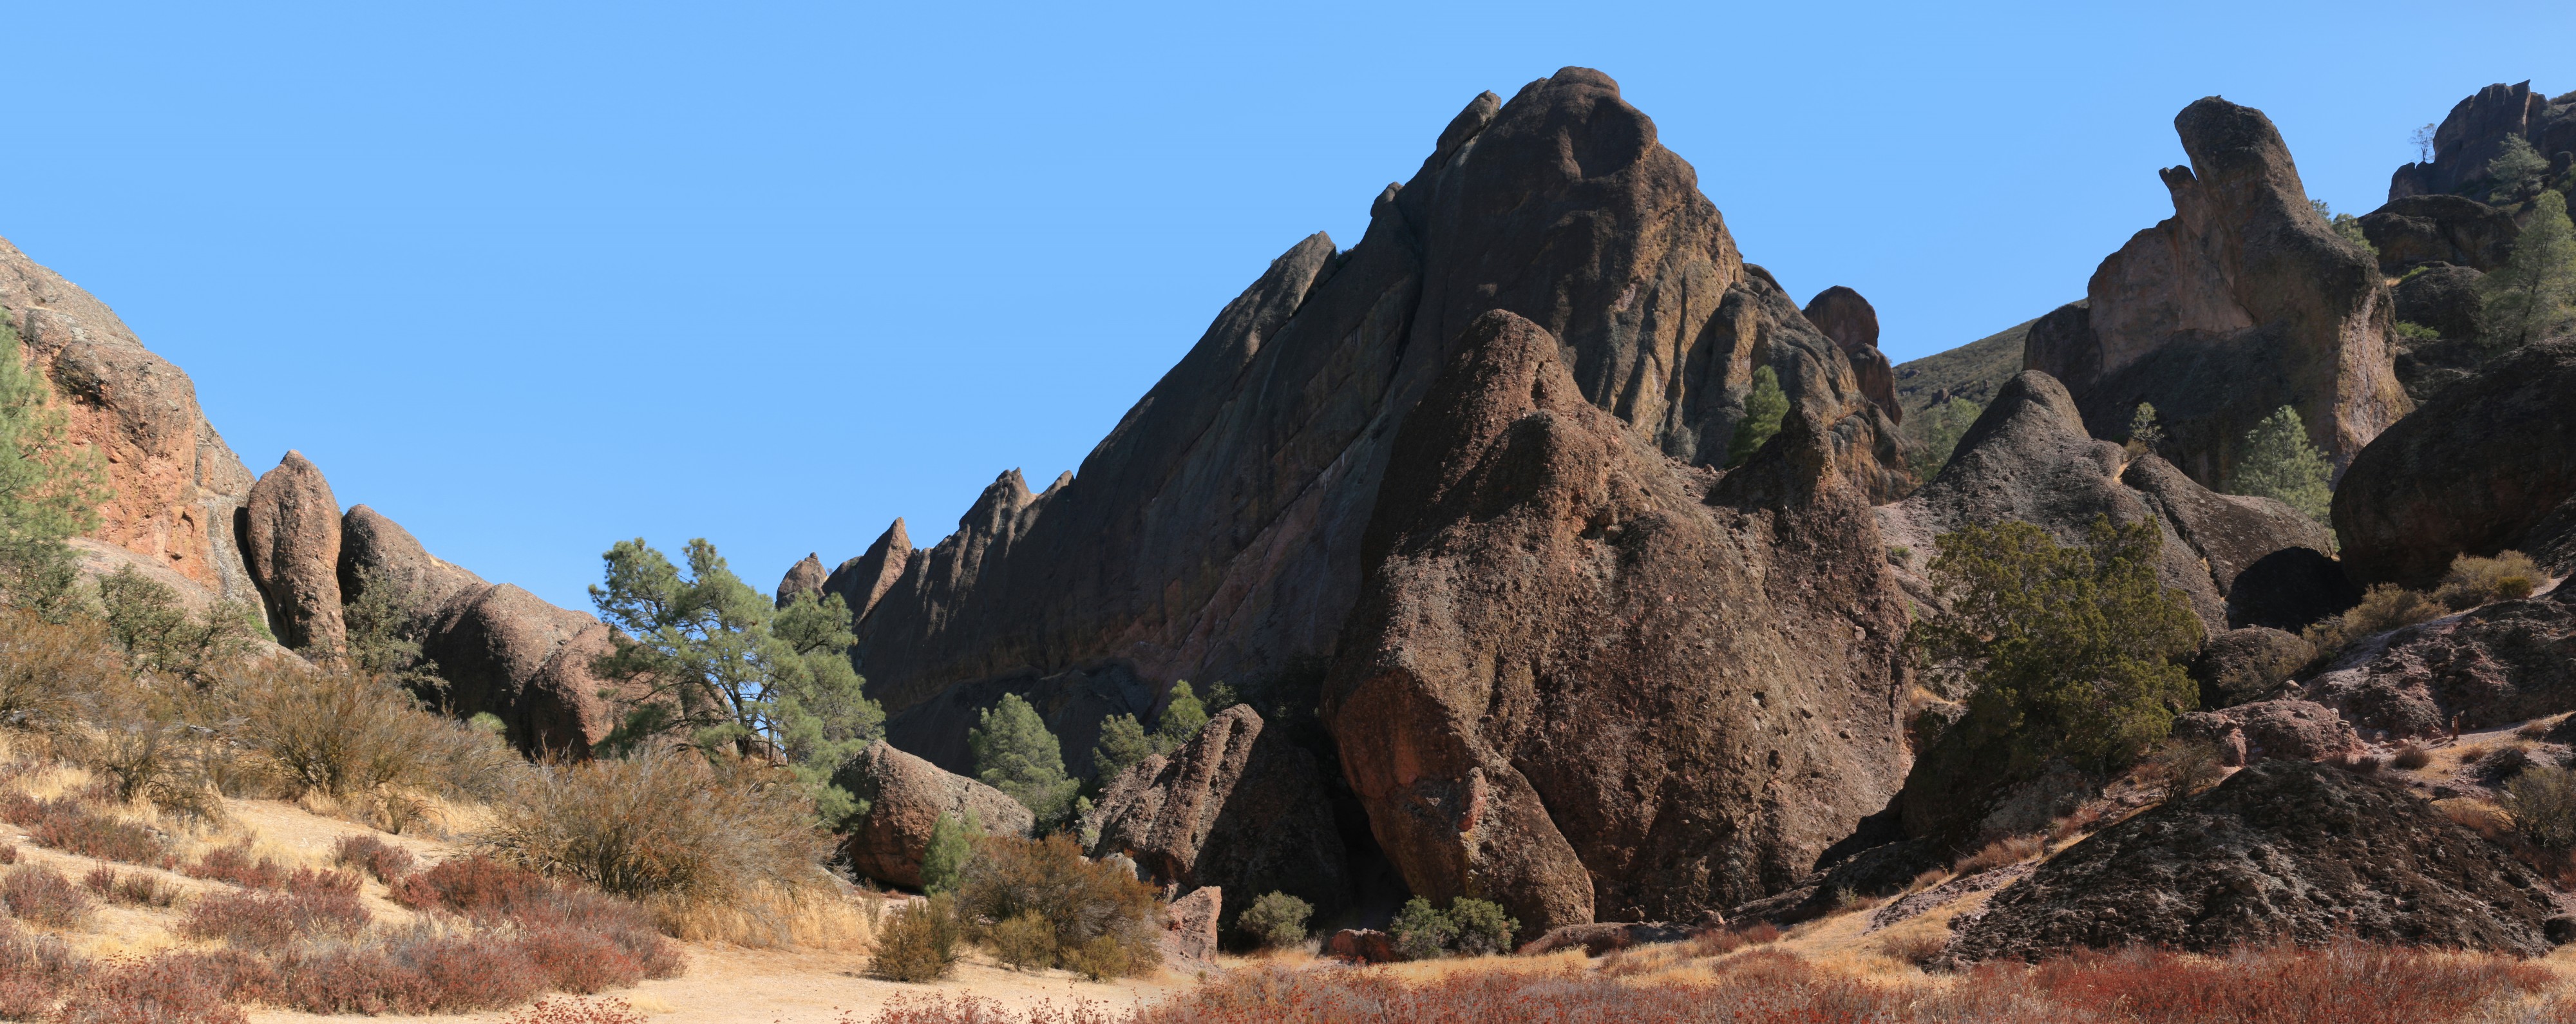 Rock formations at Pinnacles National Monument